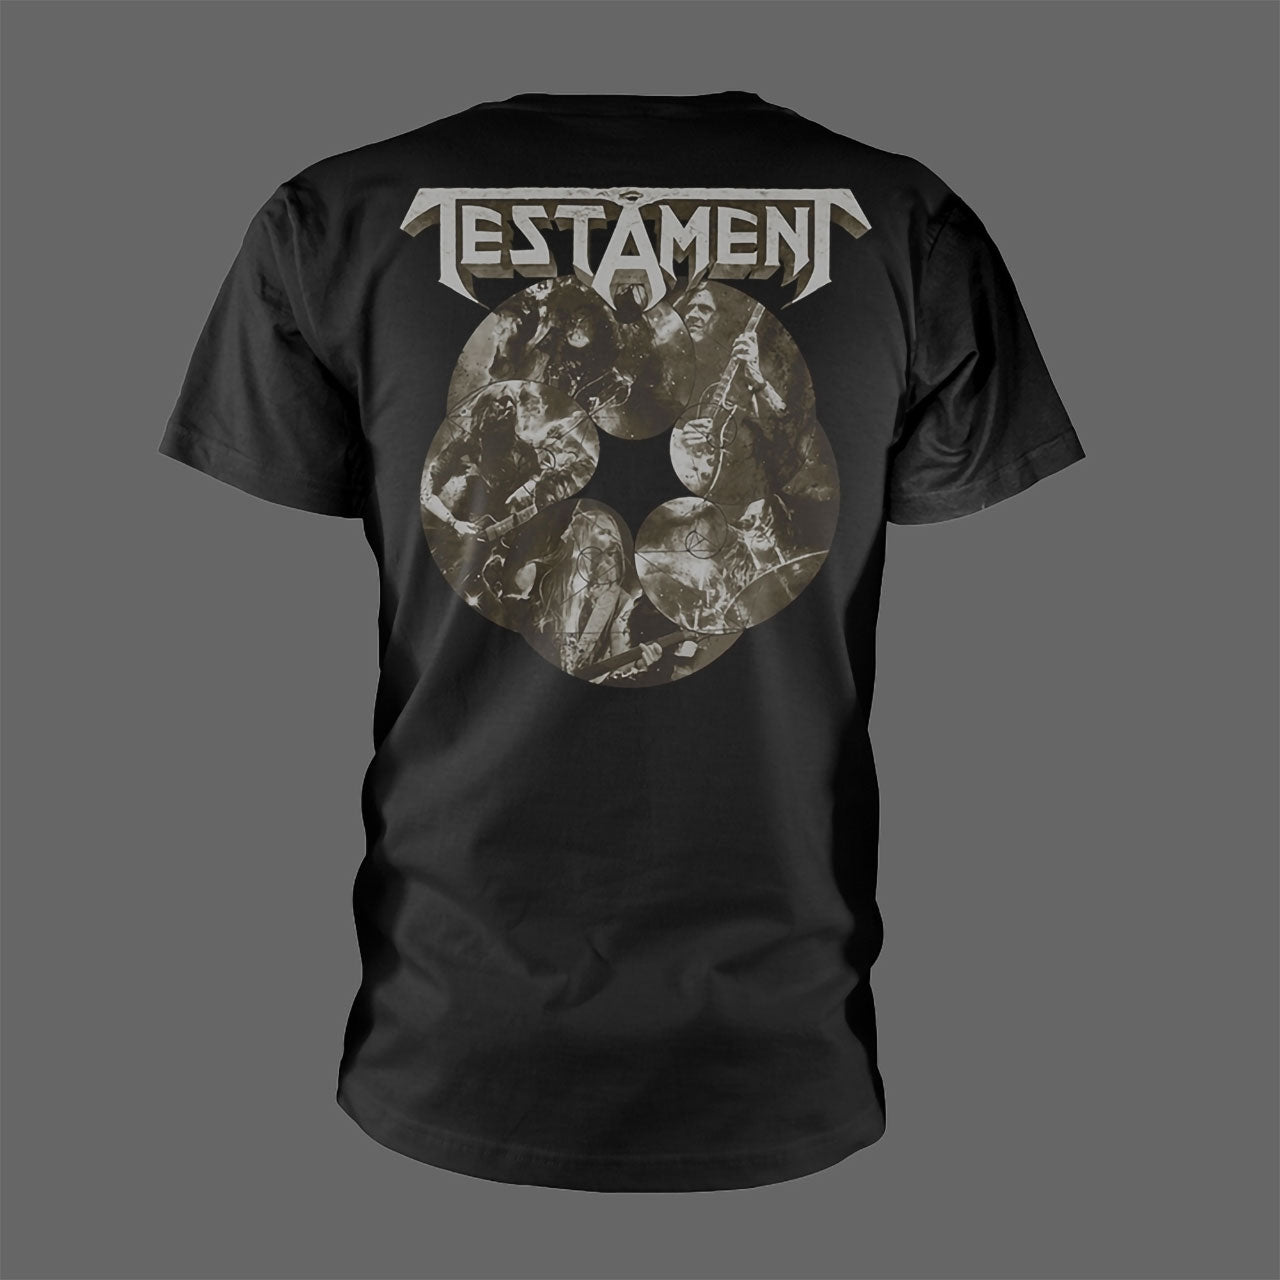 Testament - Titans of Creation (T-Shirt)